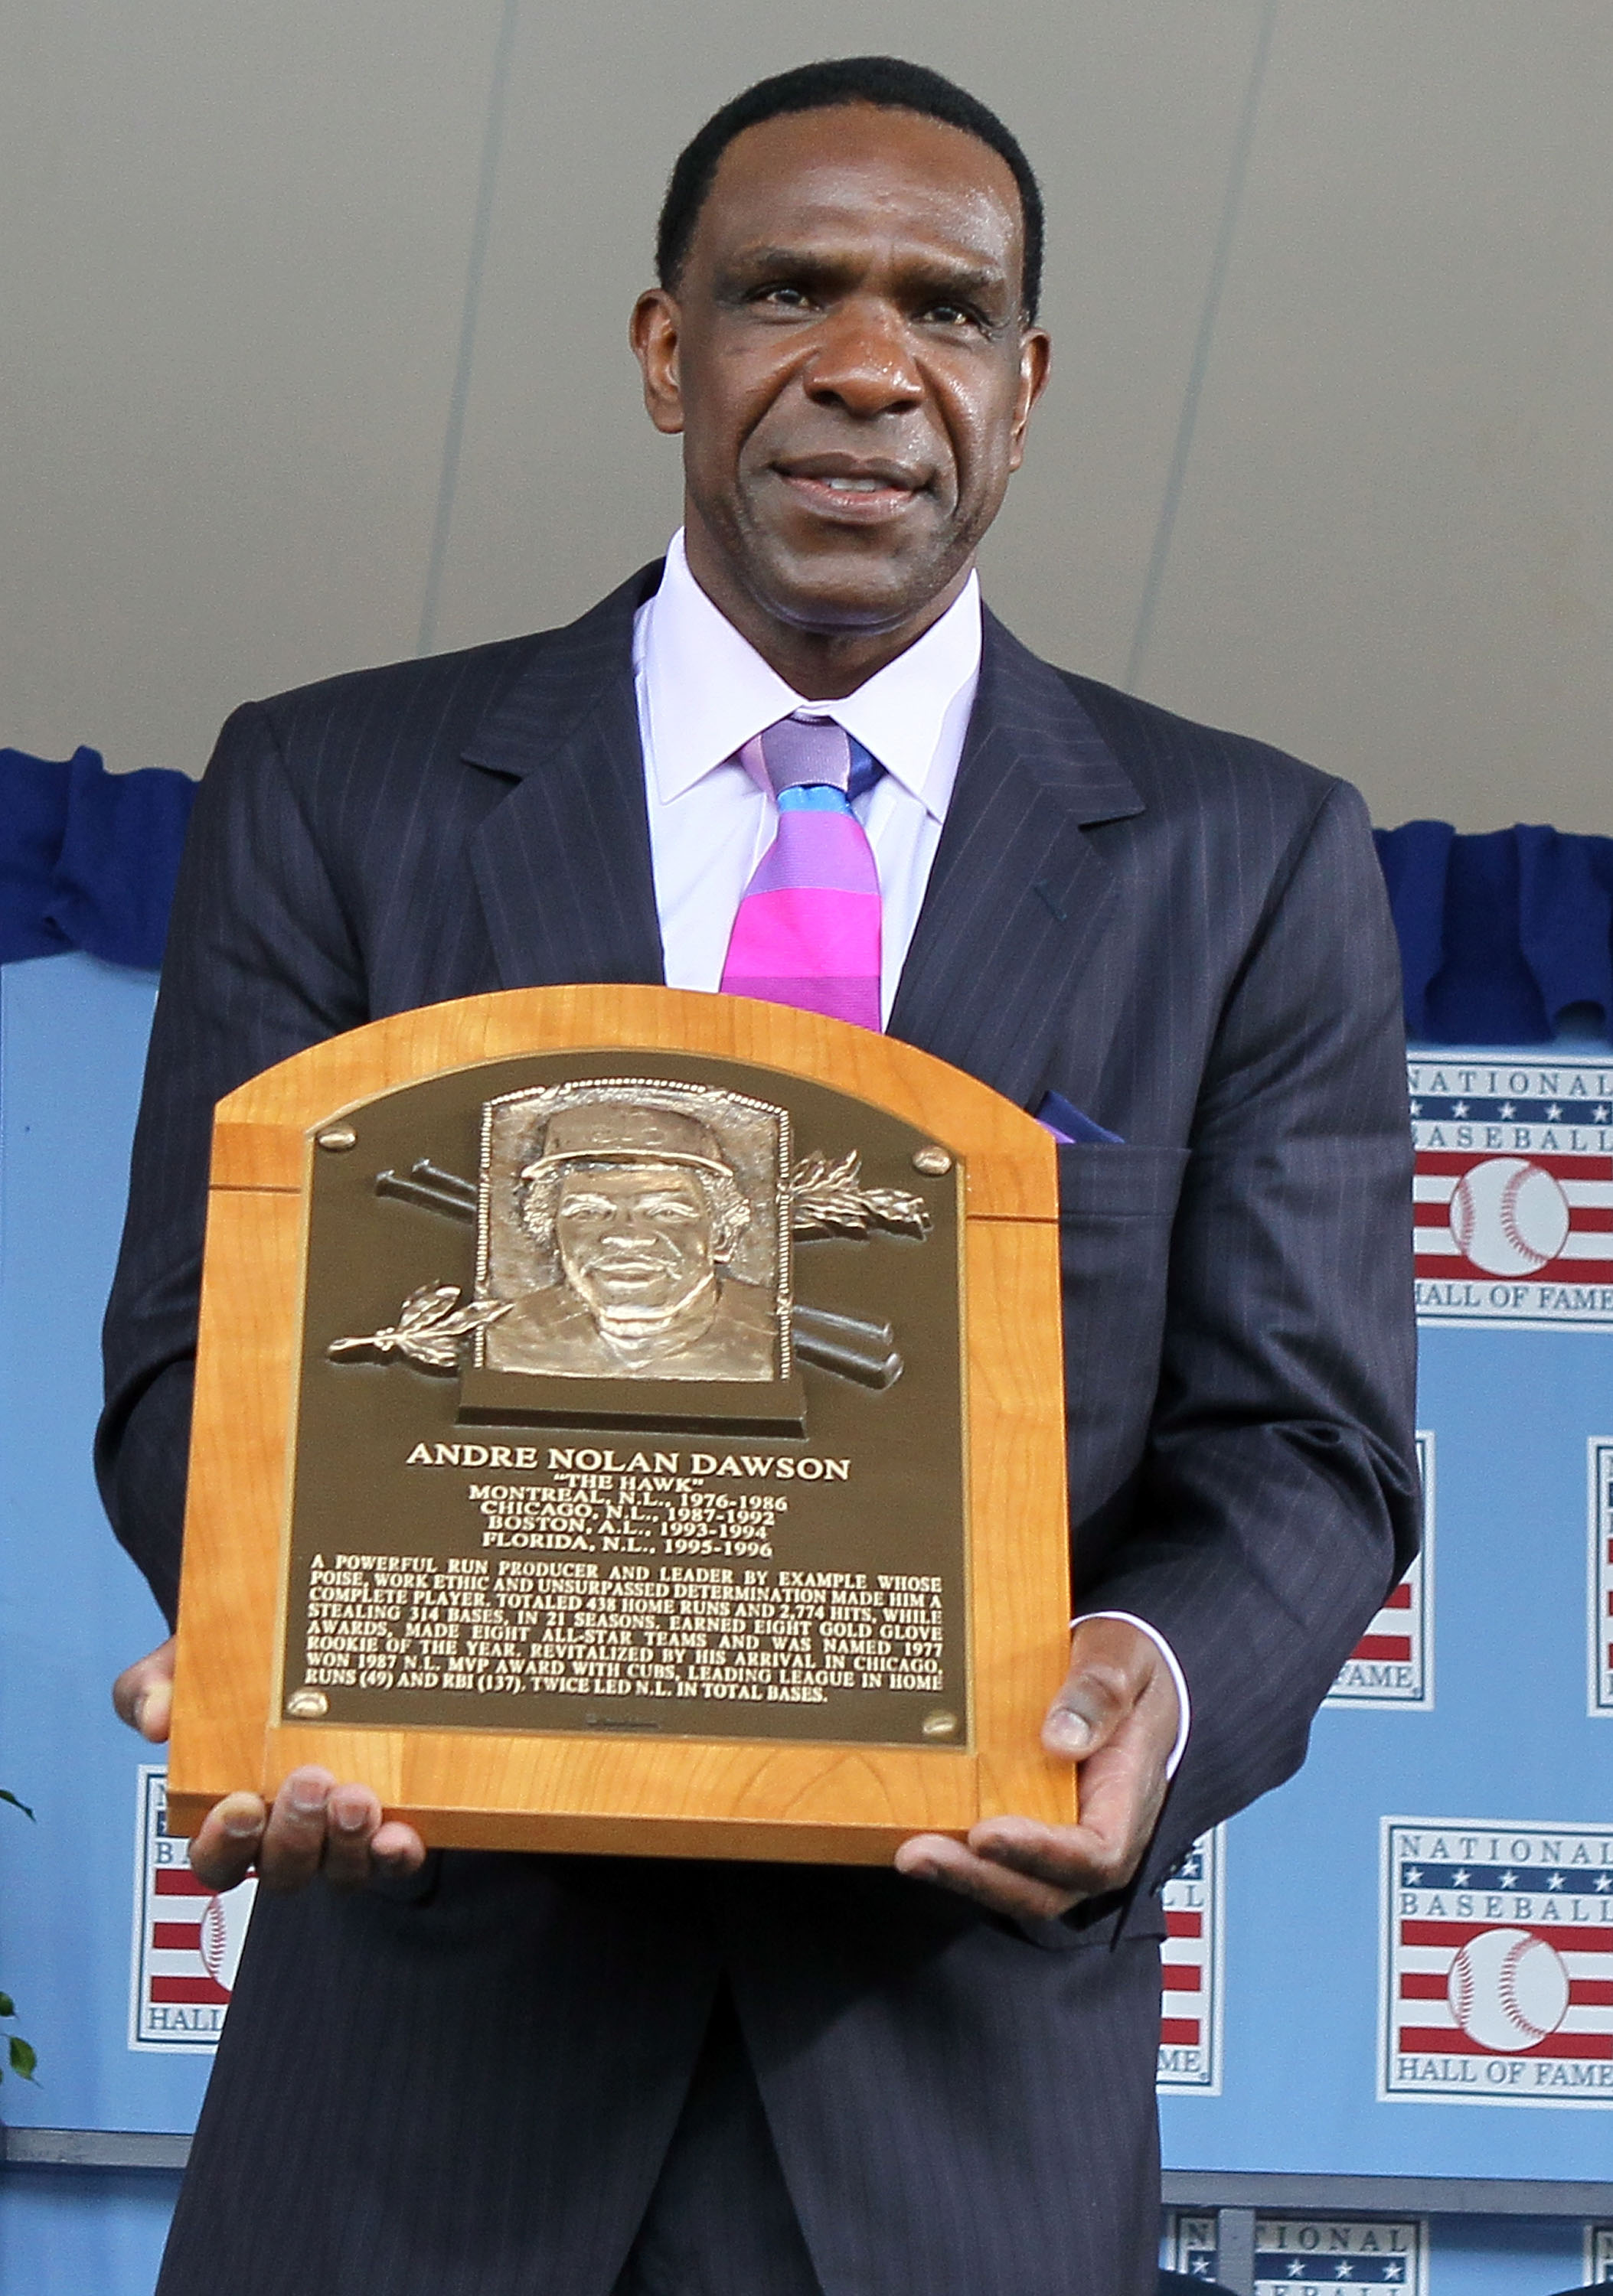 Dawson, Andre  Baseball Hall of Fame